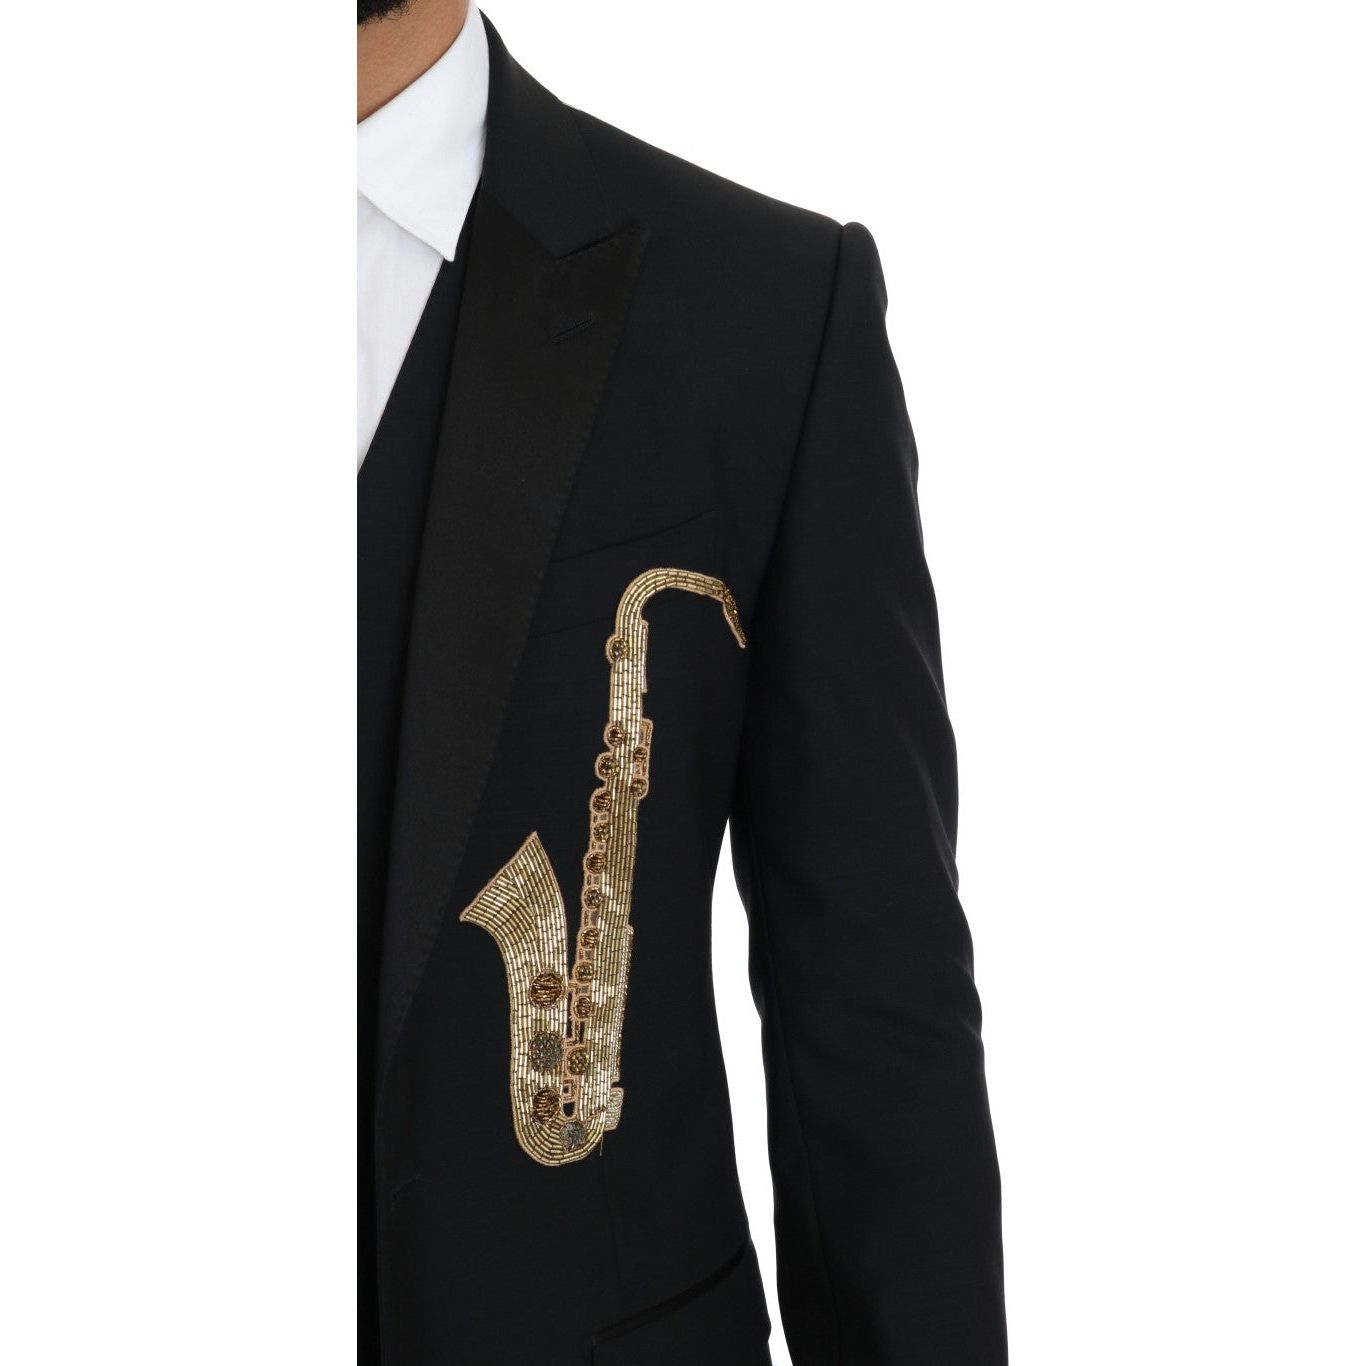 Dolce & Gabbana Elegant Black Three-Piece Suit with Saxophone Embroidery black-wool-silk-saxophone-slim-fit-suit Suit 464821-black-wool-silk-saxophone-slim-fit-suit-5.jpg